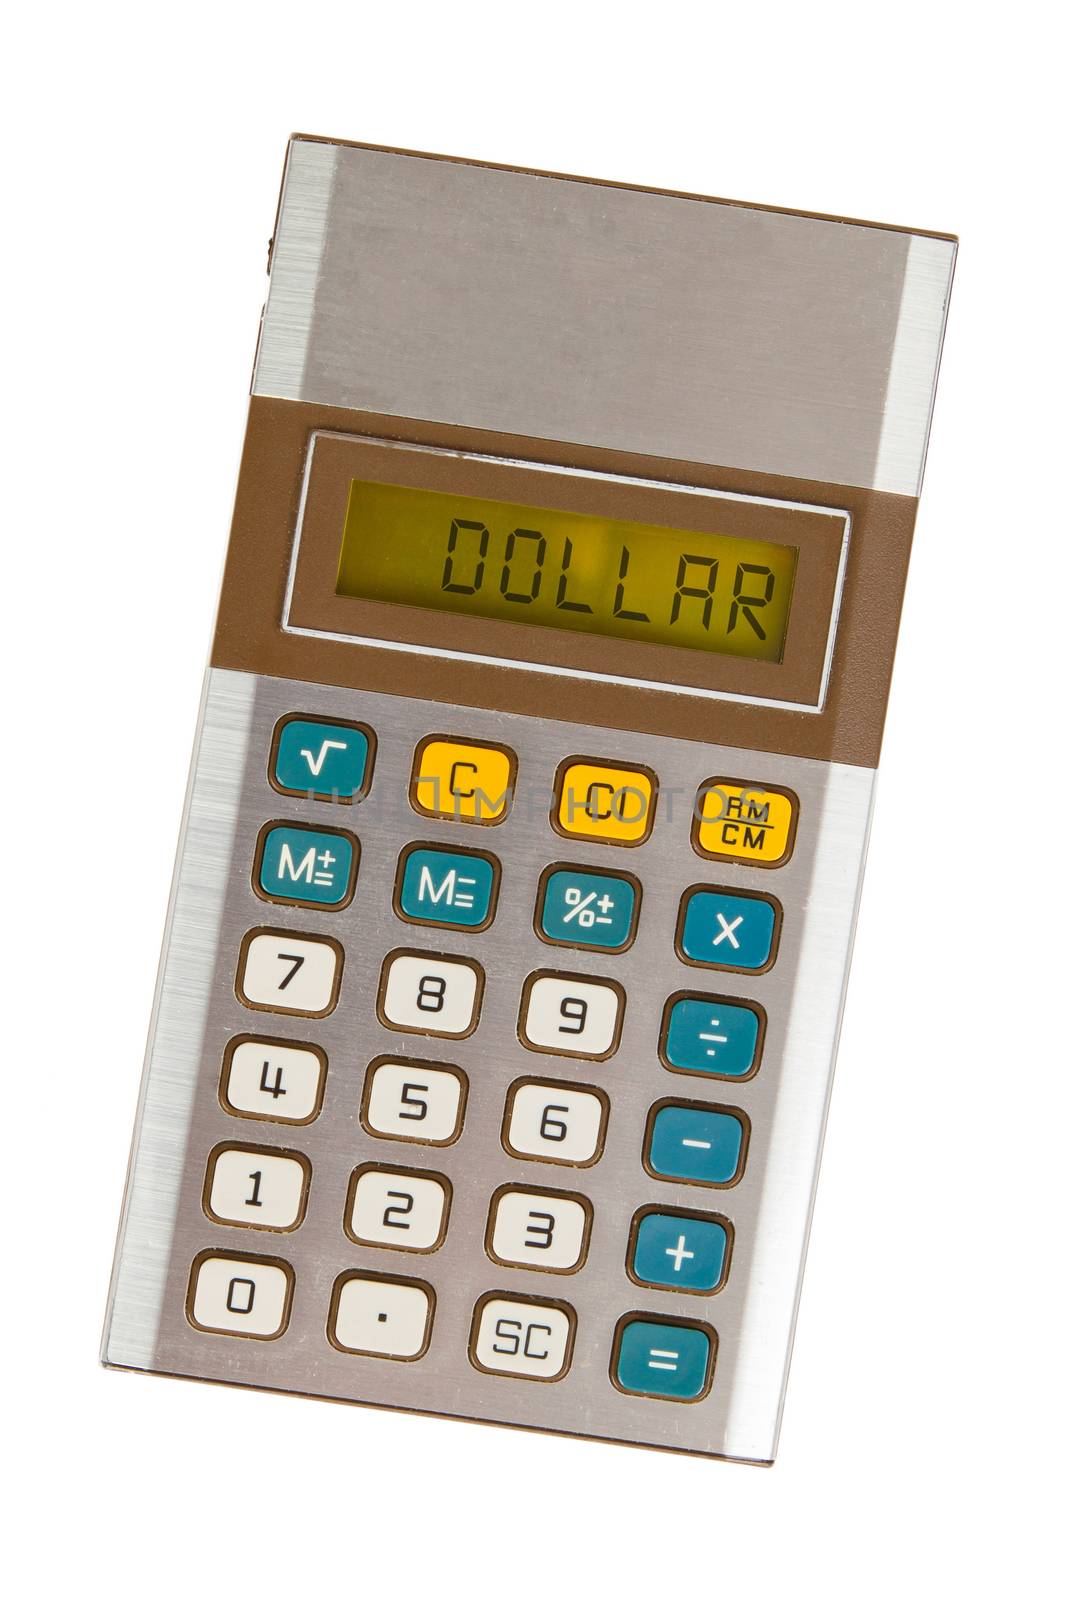 Old calculator - dollar by michaklootwijk